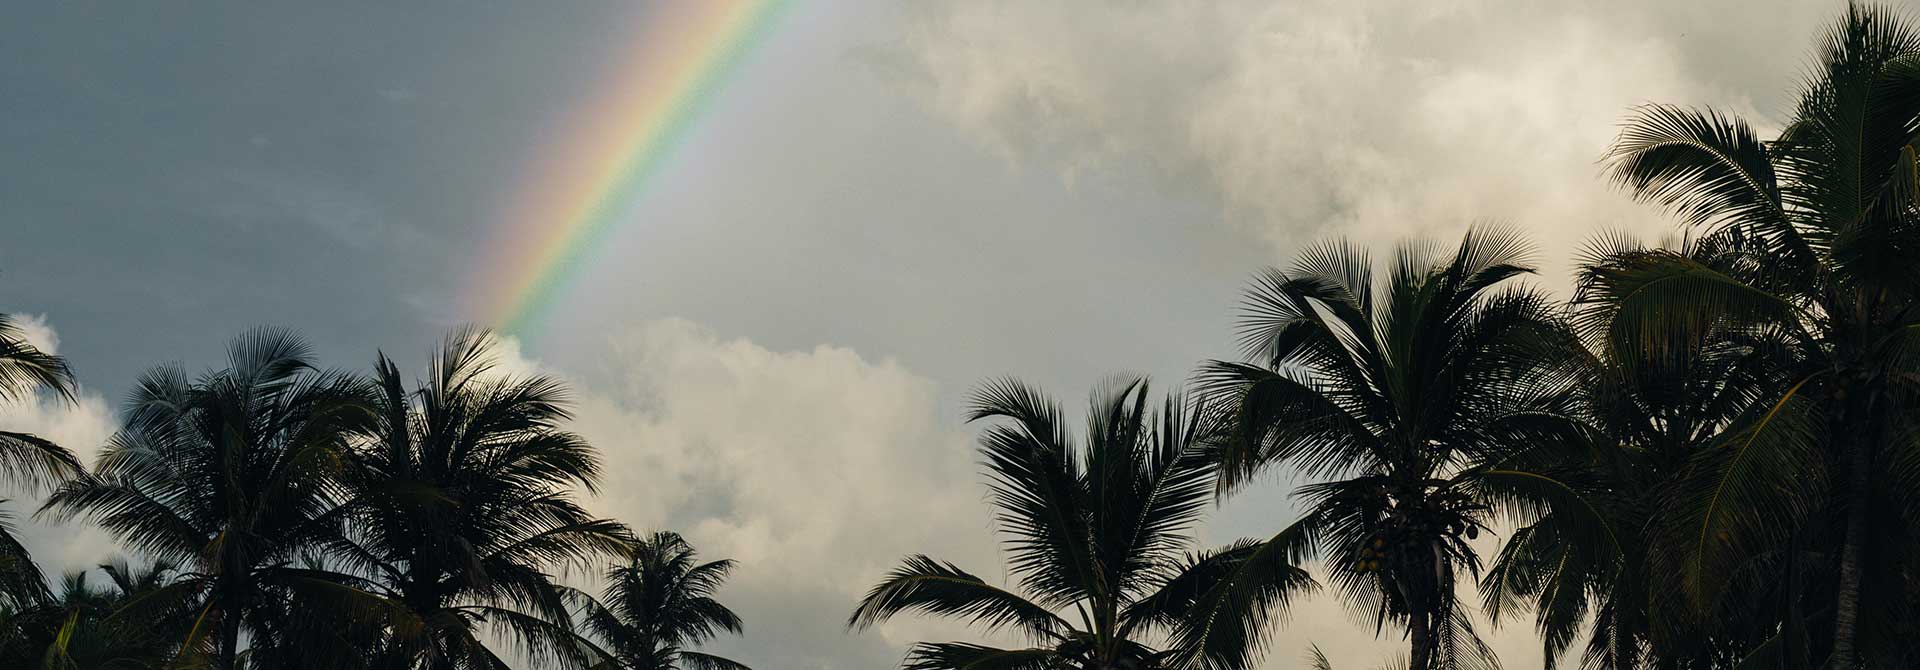 nicaragua rainbow